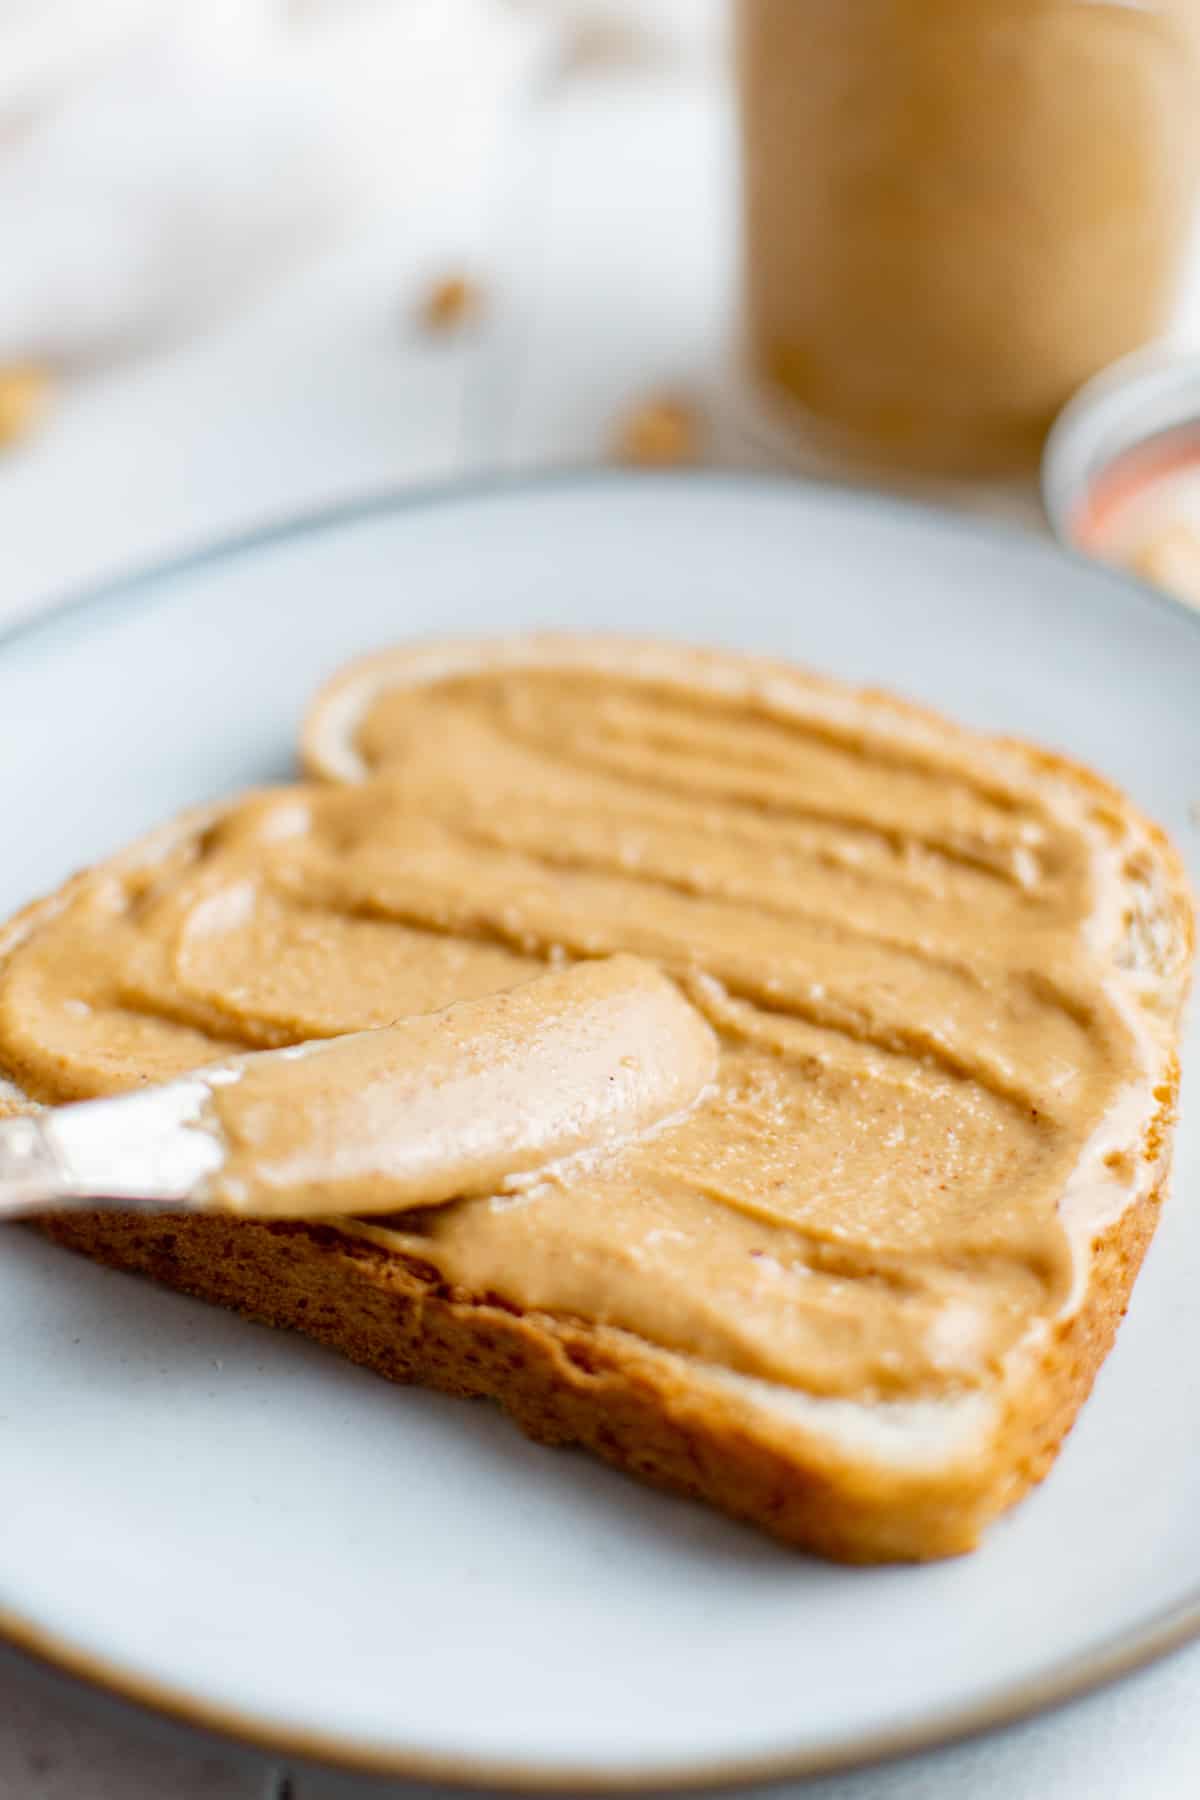 spreading peanut butter onto a piece of toast